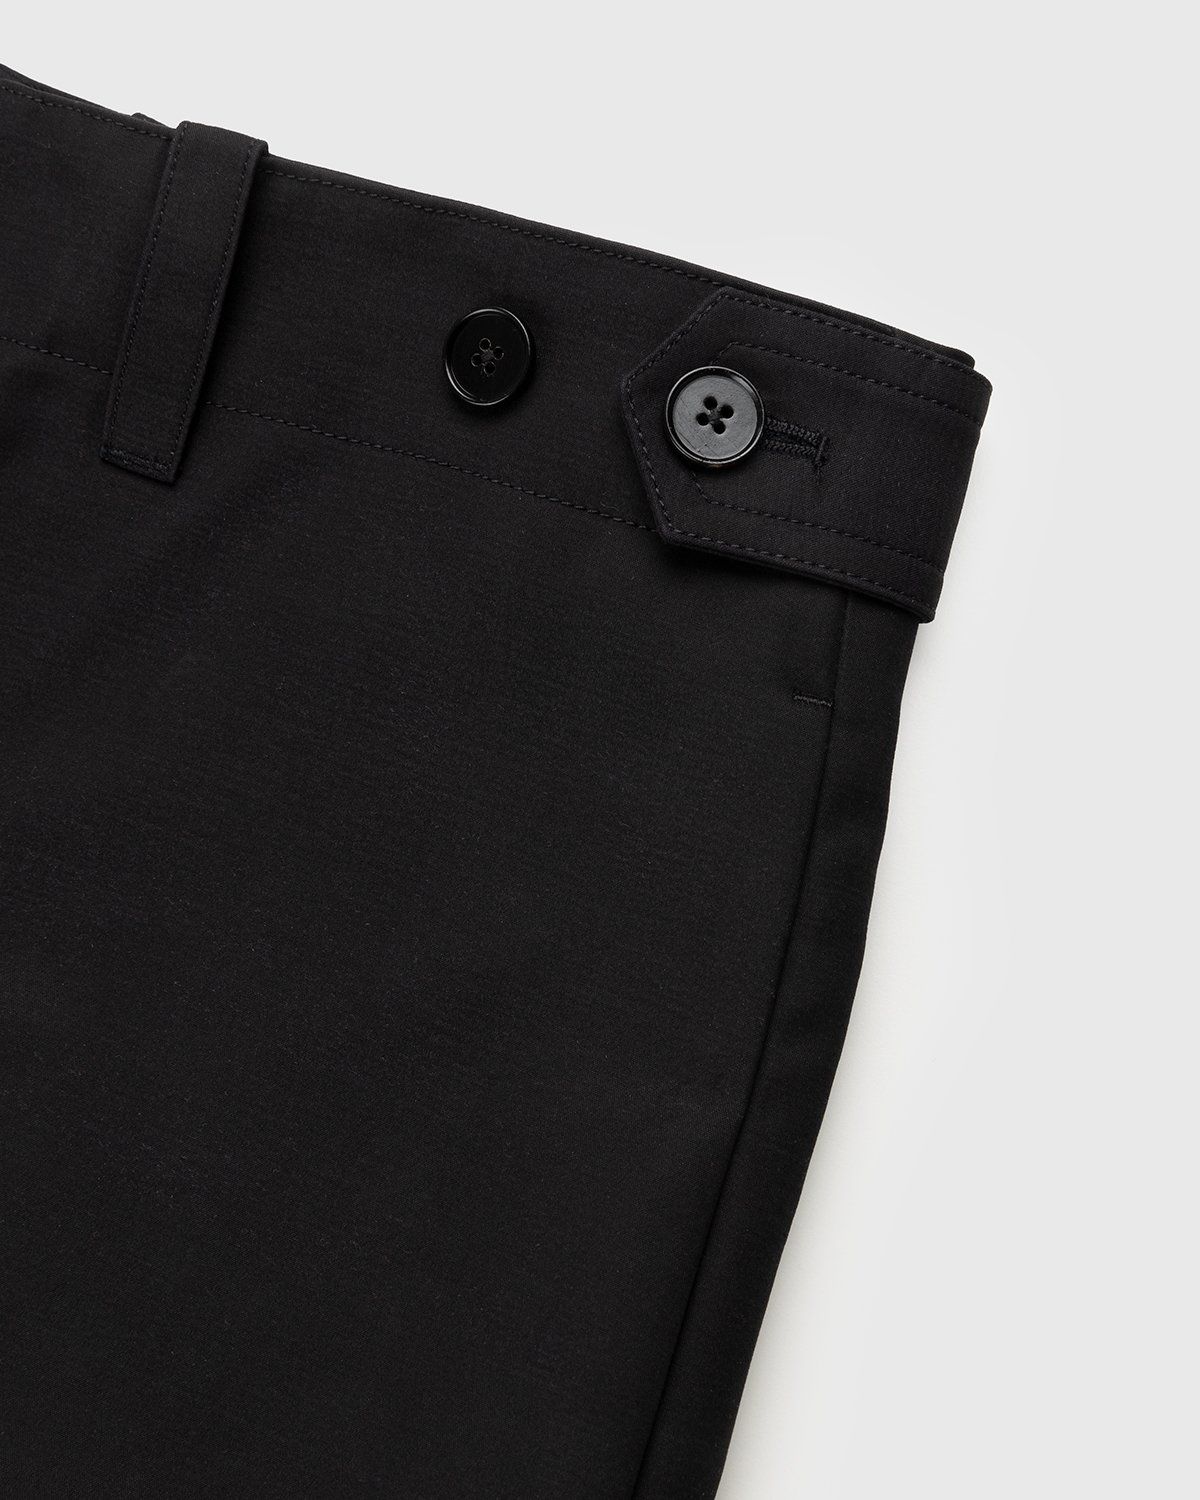 Jil Sander – Cotton Cargo Shorts Black - Cargo Shorts - Black - Image 3